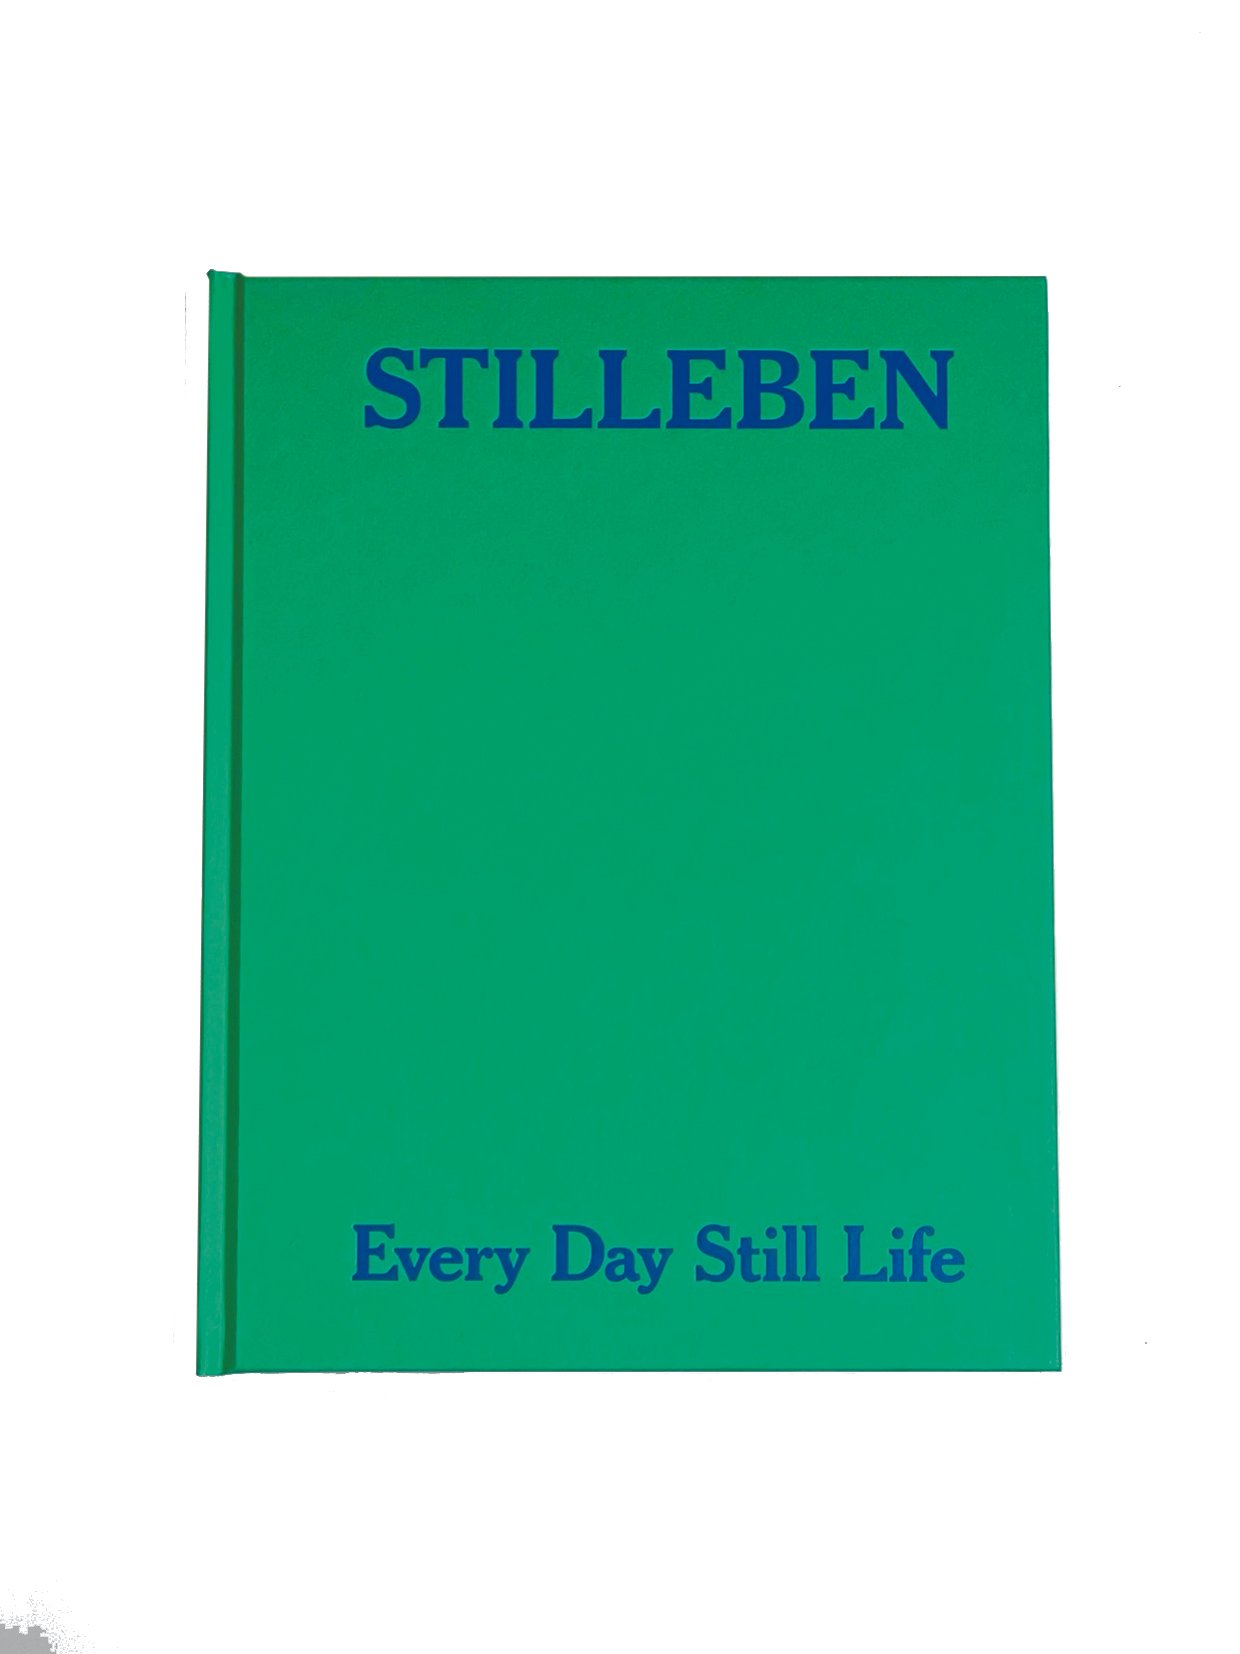 Stilleben_Book_Every_Day_Still_Life_front copy.jpg